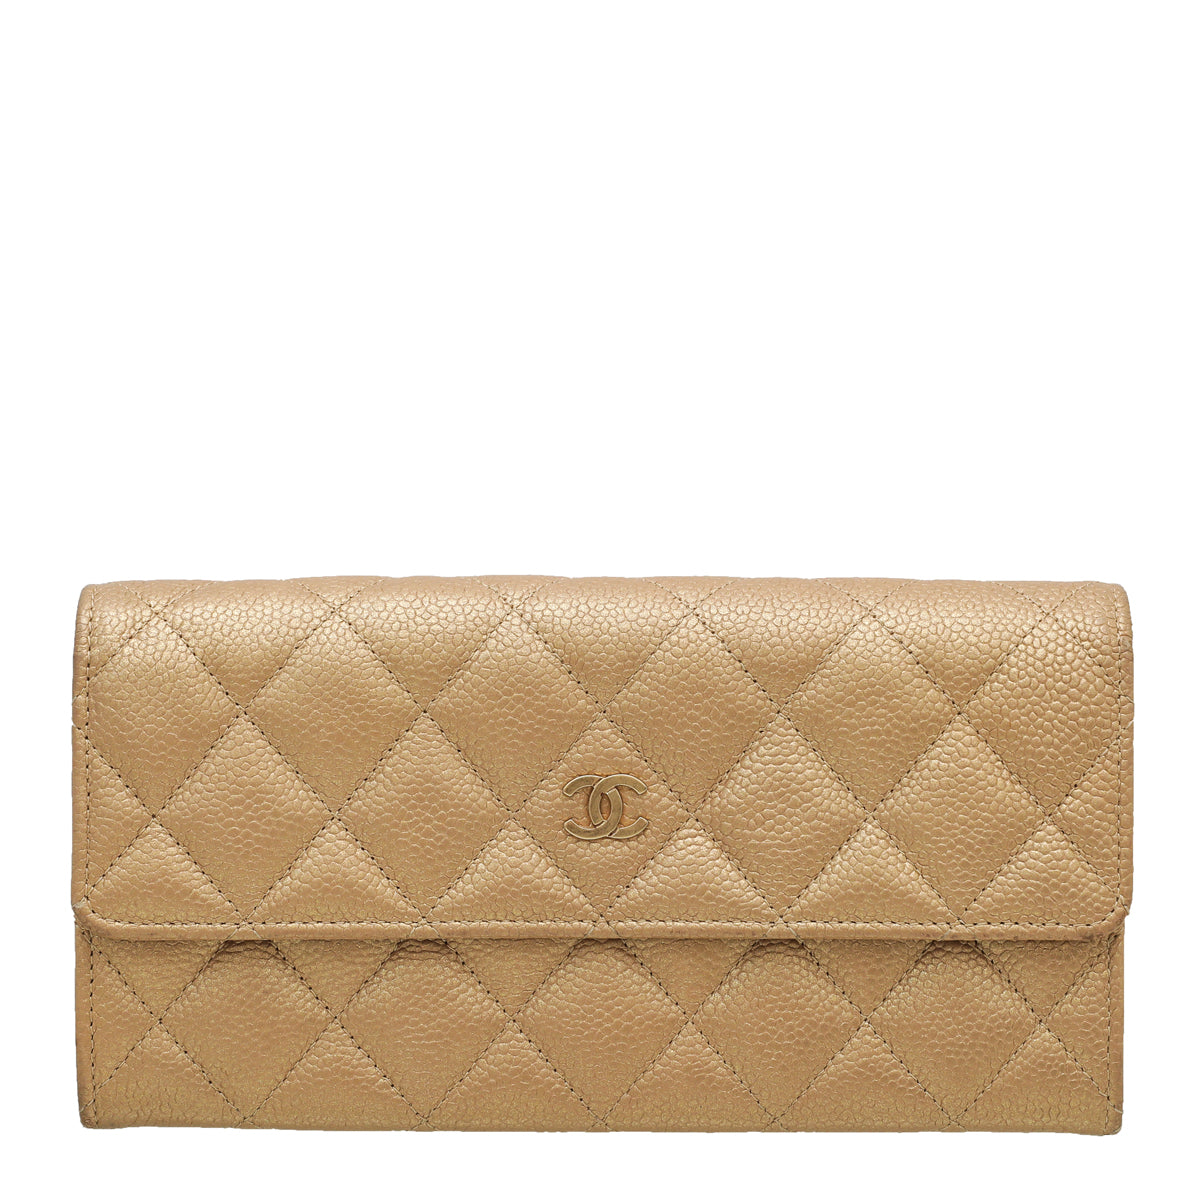 Chanel Metallic Gold CC Classic Flap Wallet